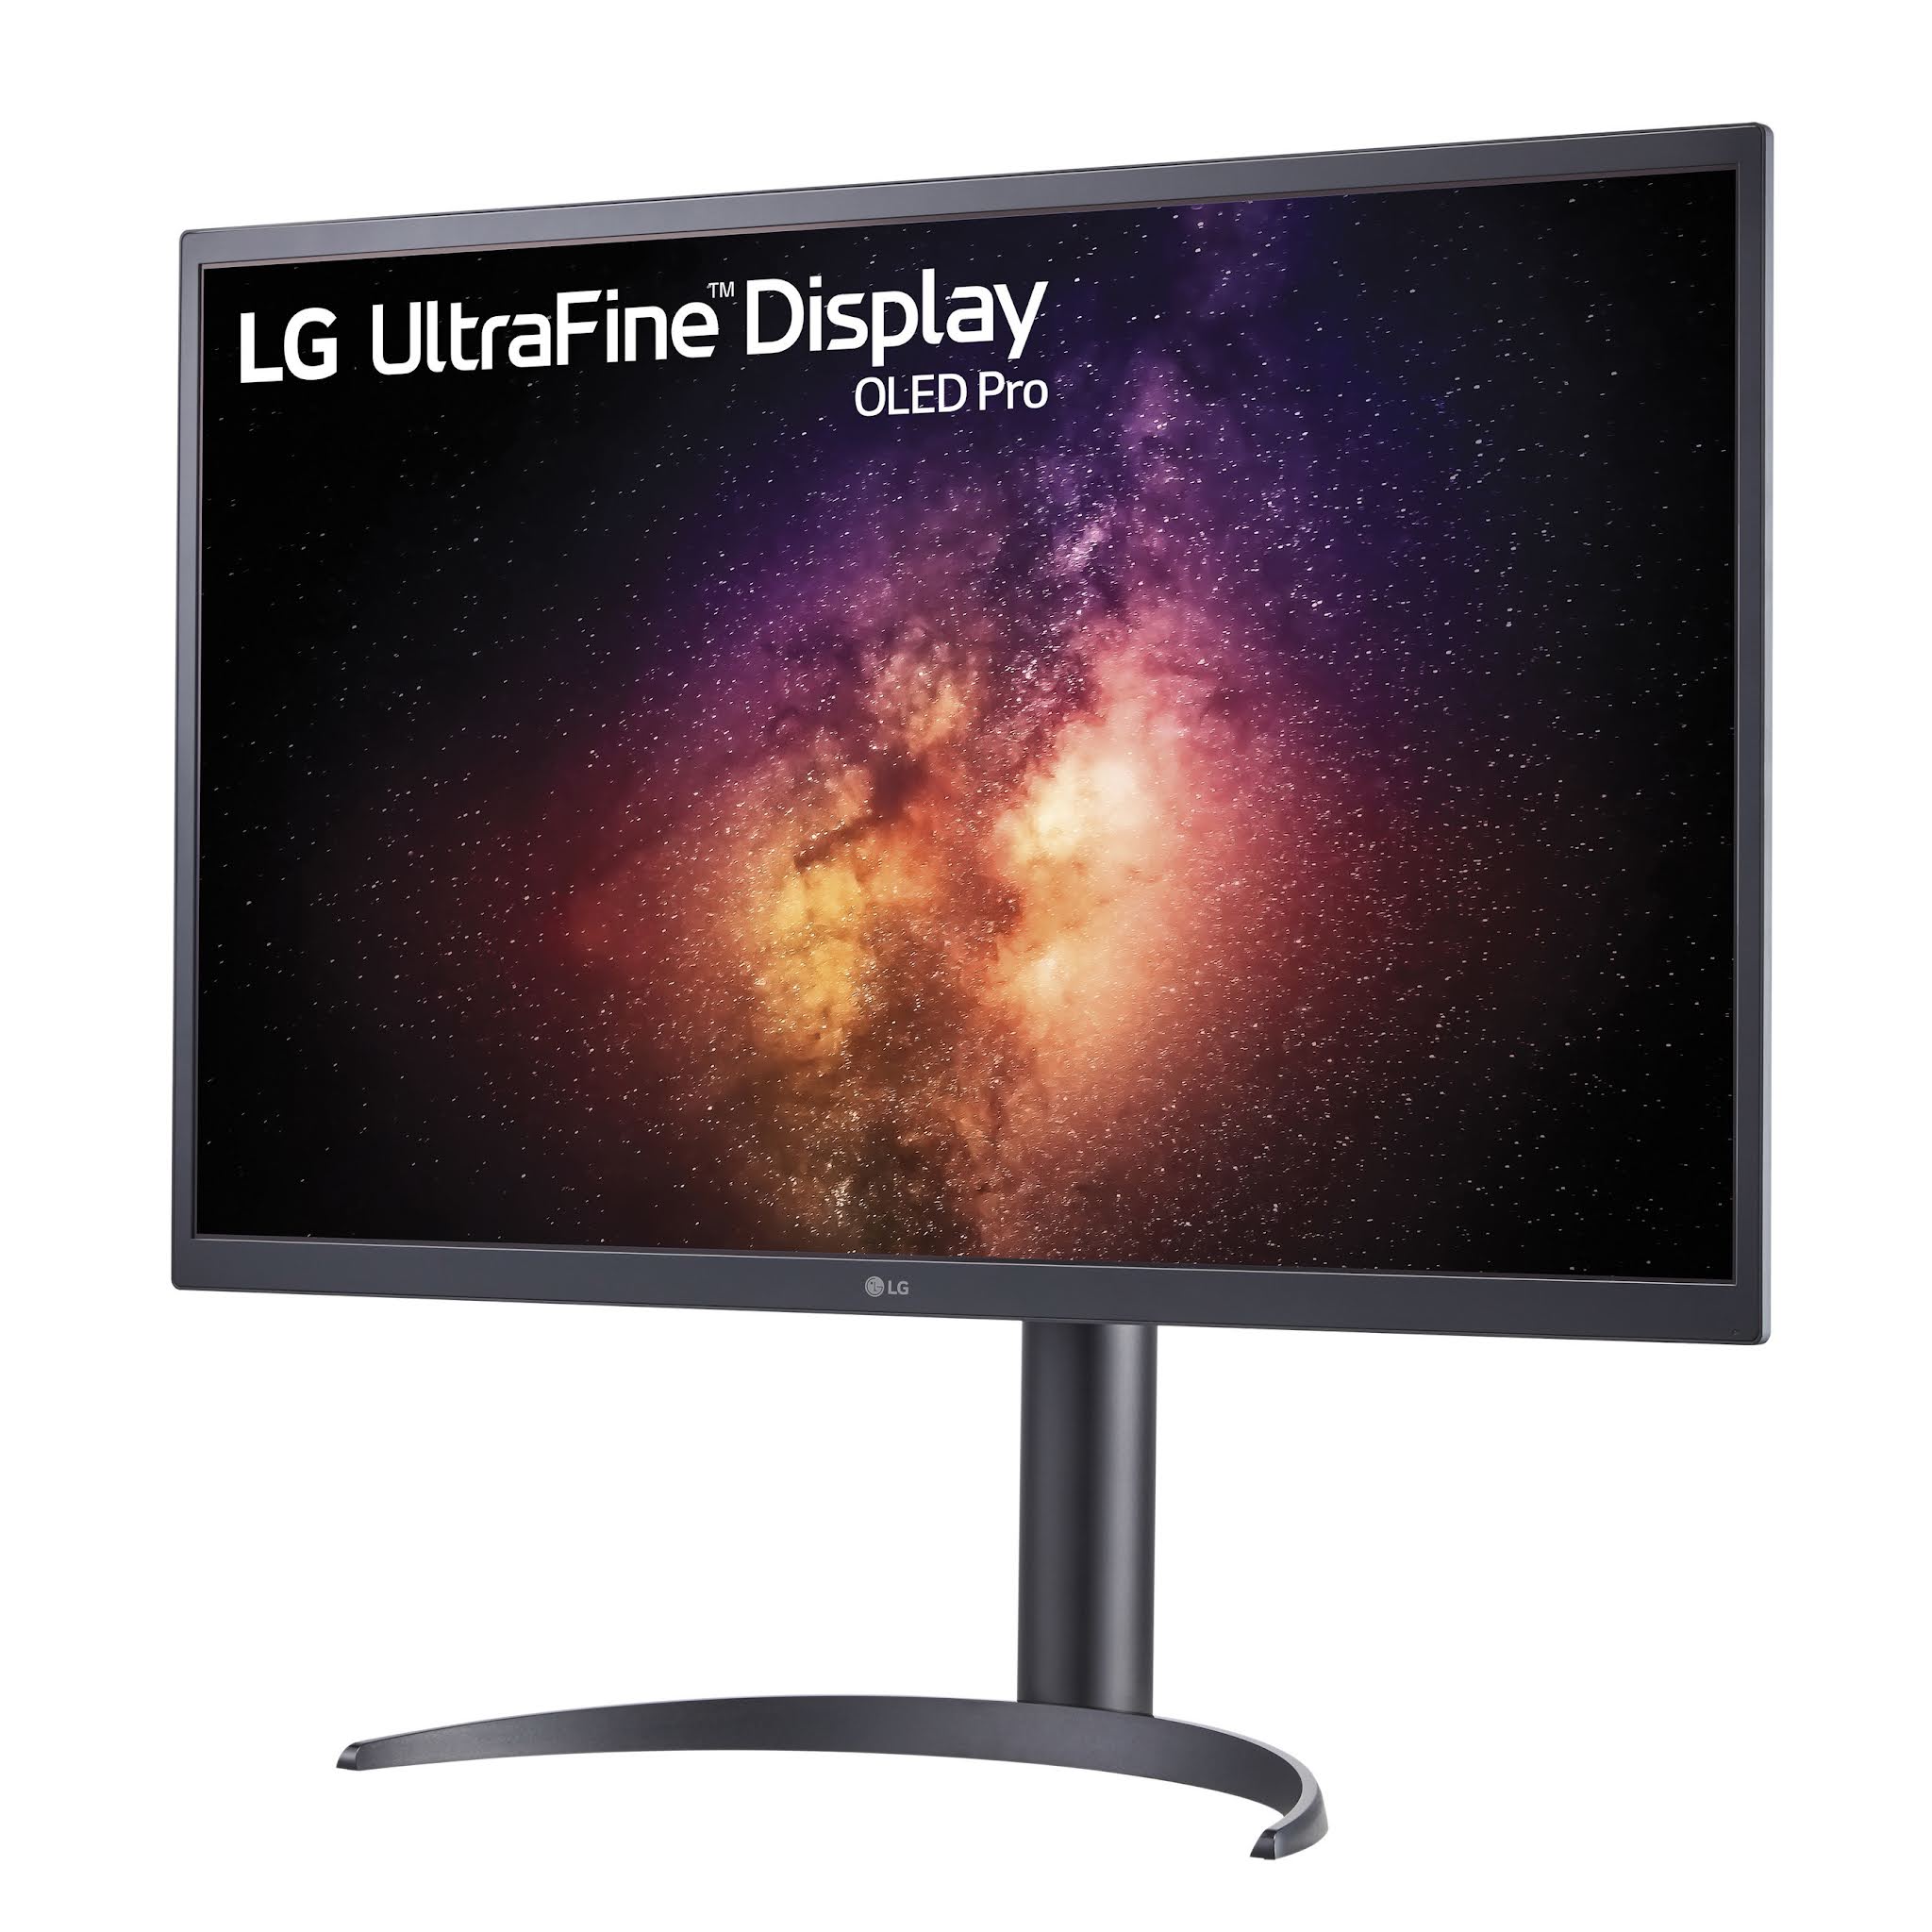 LG Announces U.S. Debut Of UltraFine OLED Pro Monitor